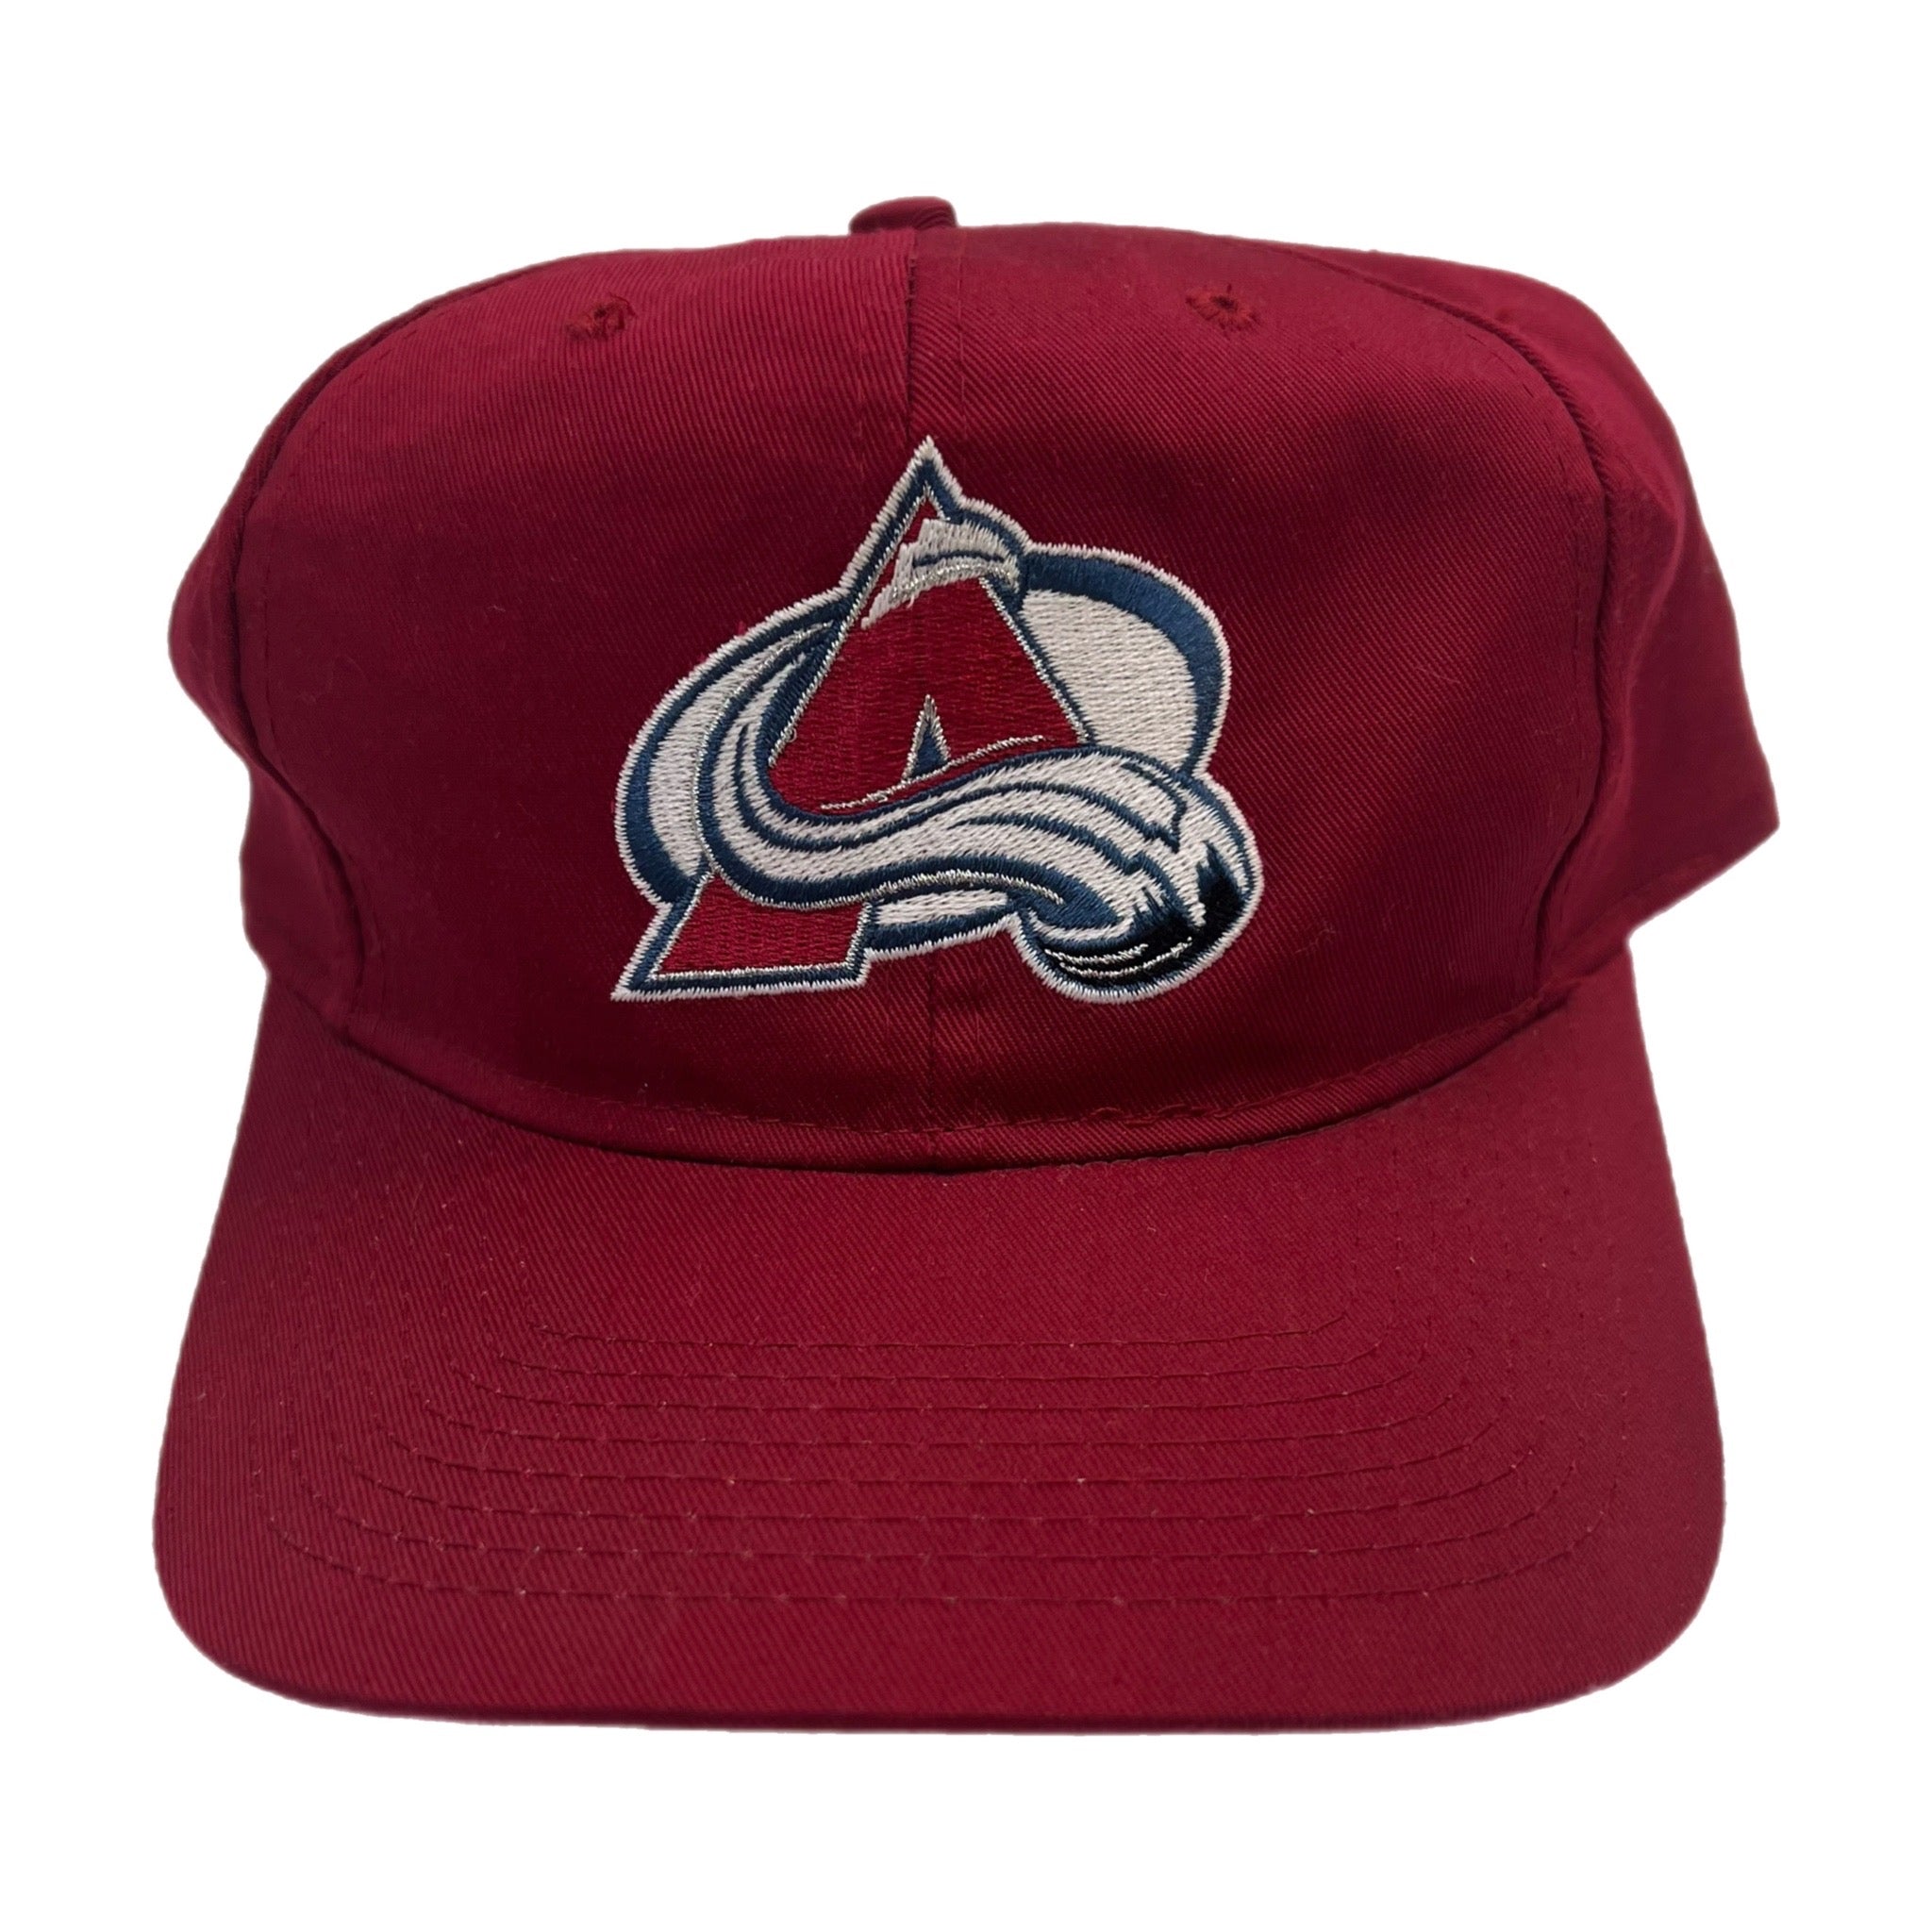 Vintage Colorado Avalanche Starter Hat